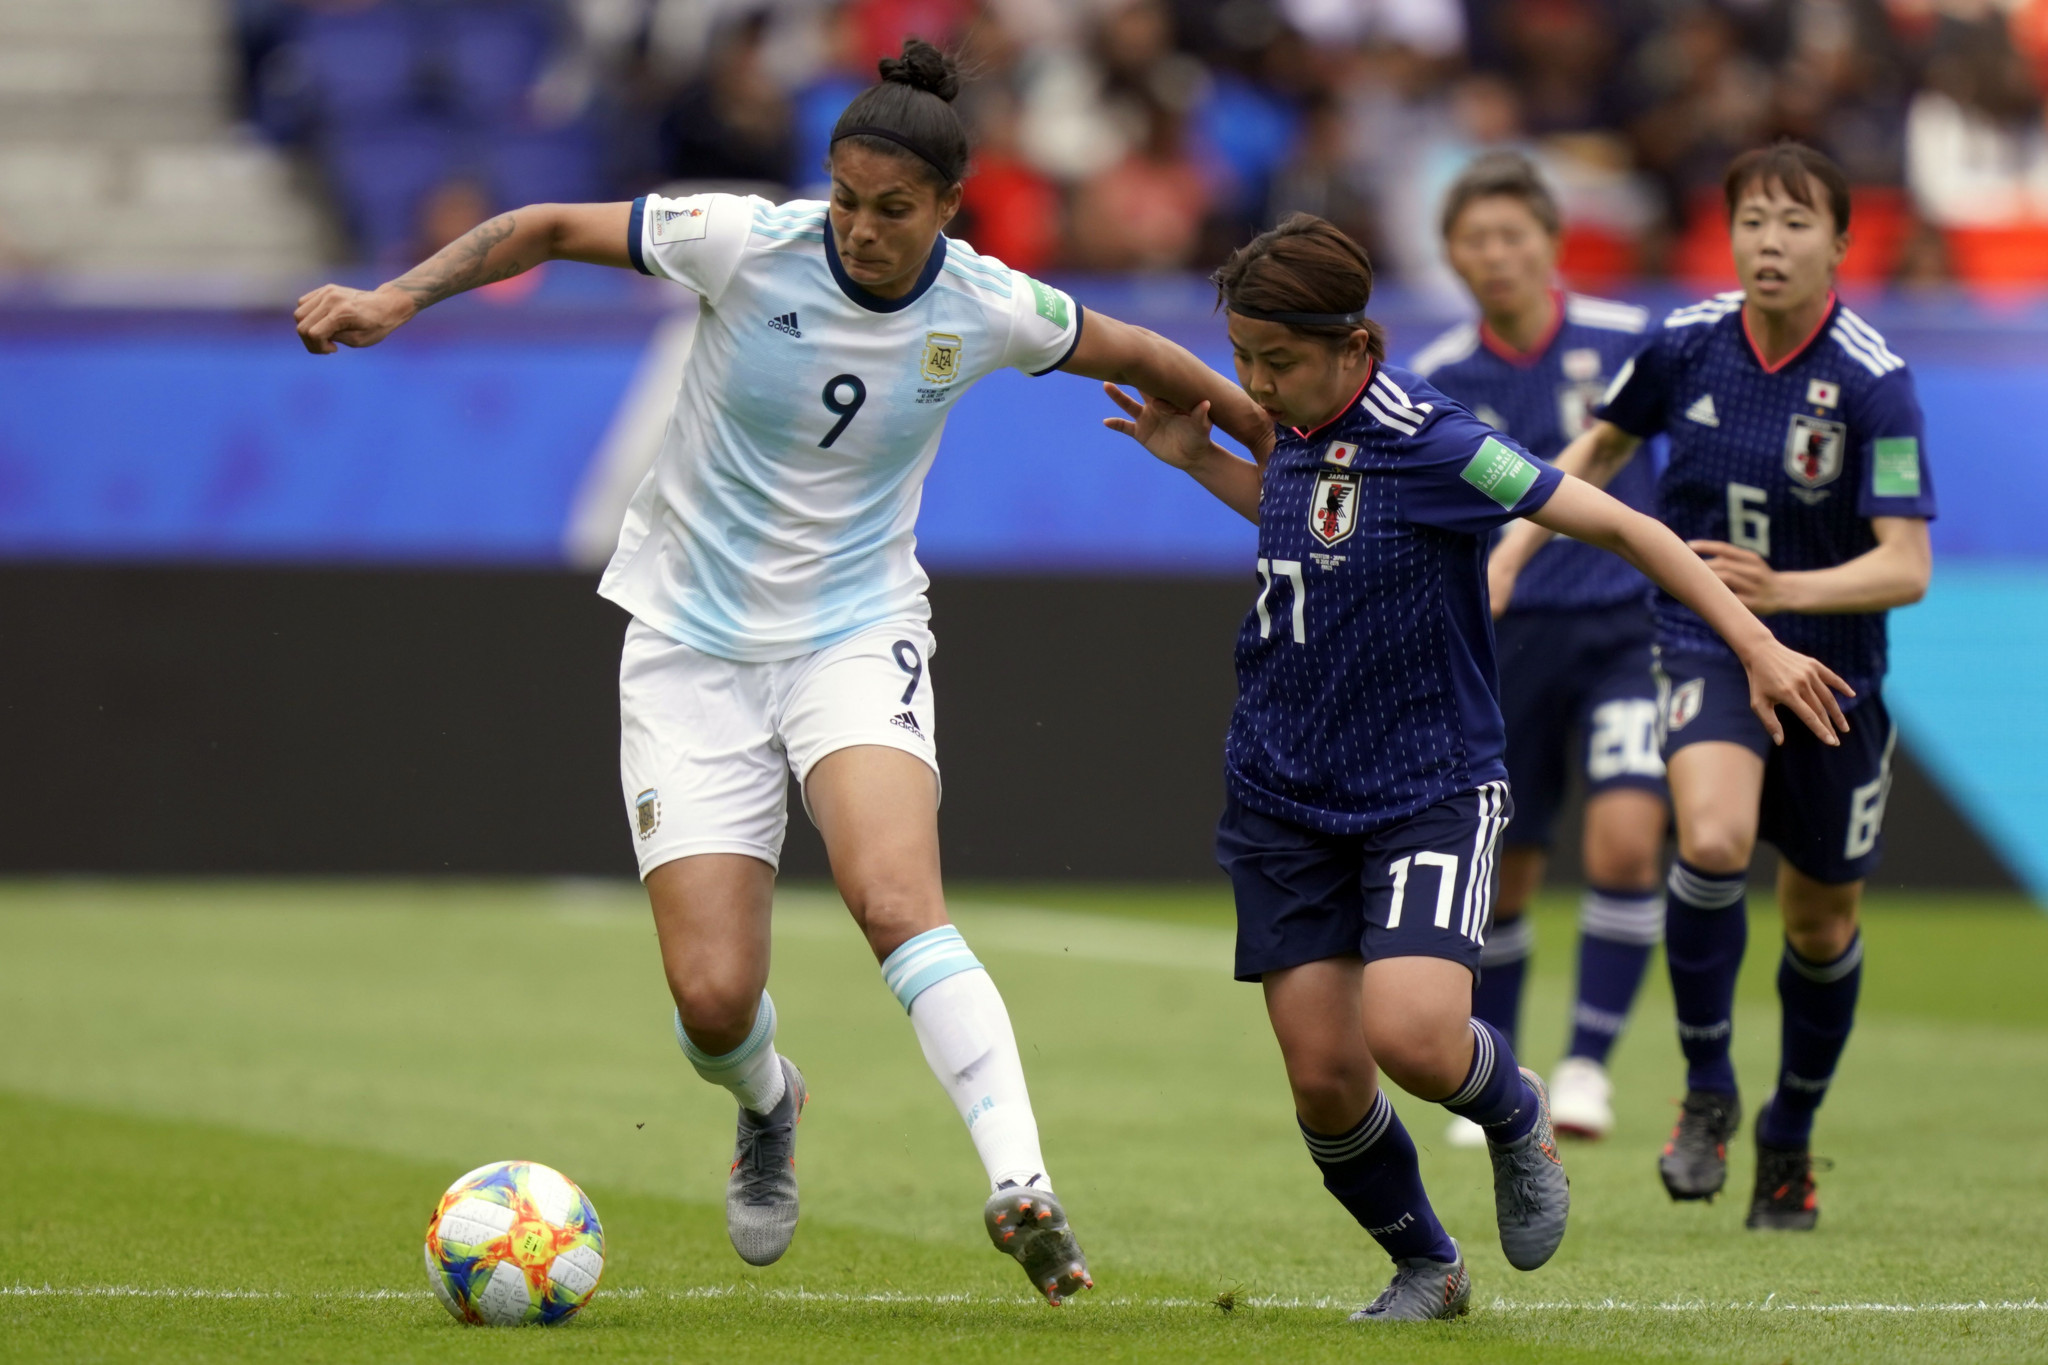 Argentina forward Sole Jaimes brushes off Japanese midfielder Narumi Miura ©Getty Images